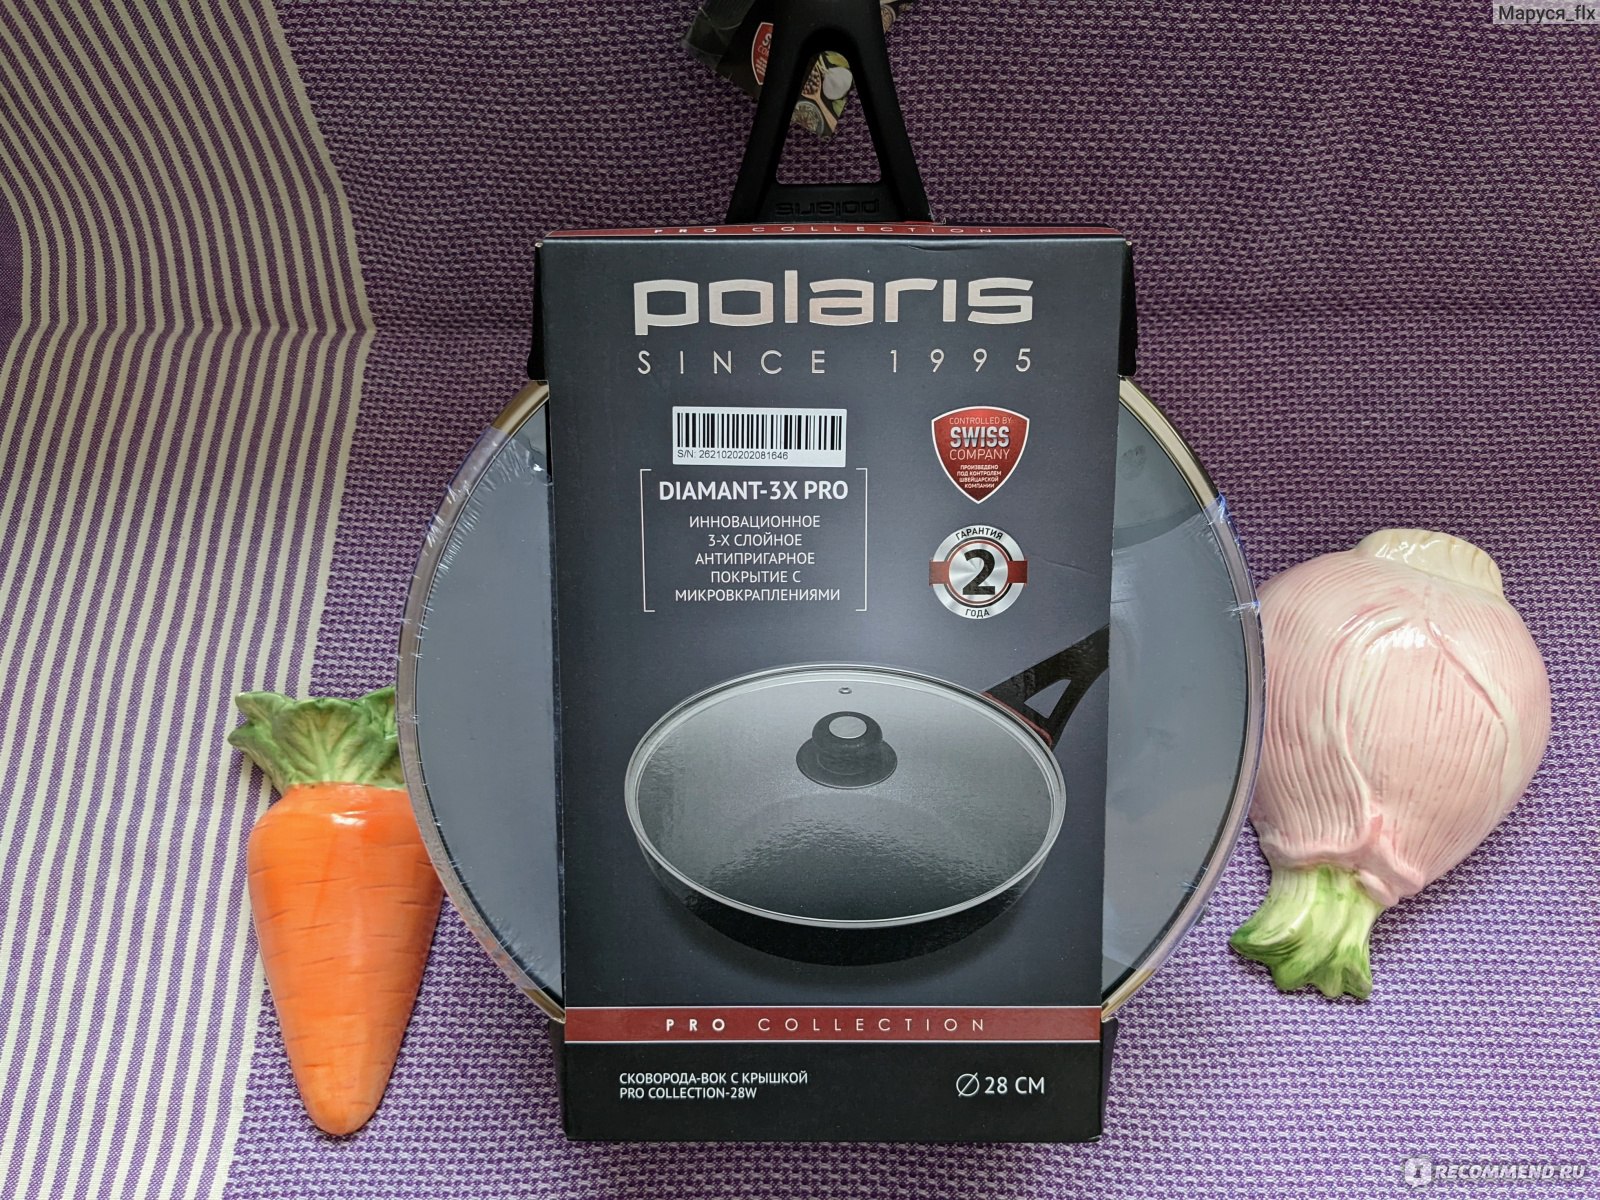 Polaris pro collection